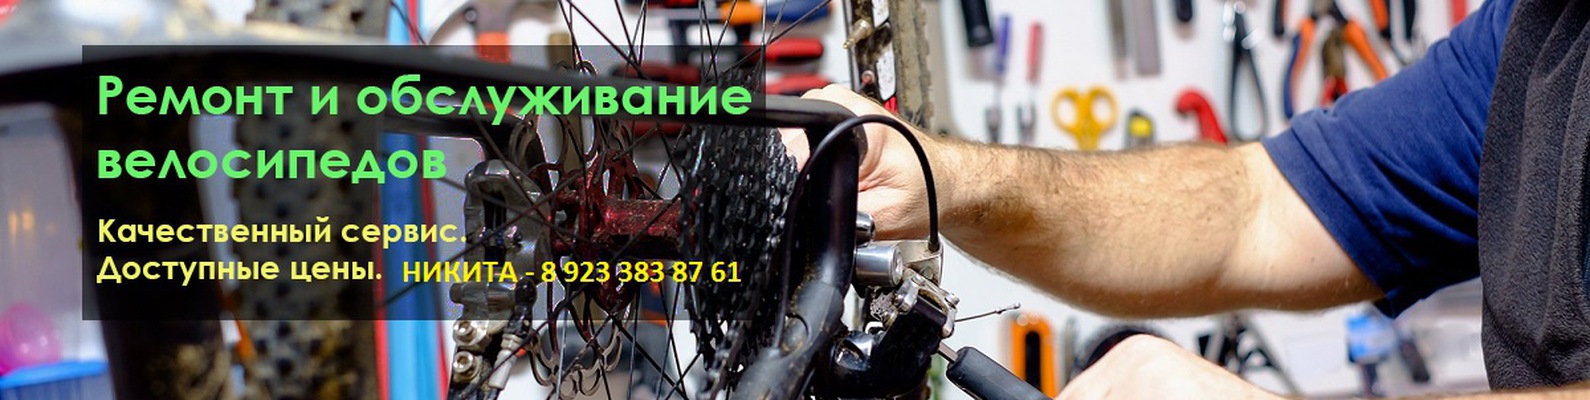 ✅ сборка велосипеда из коробки - veloexpert33.ru